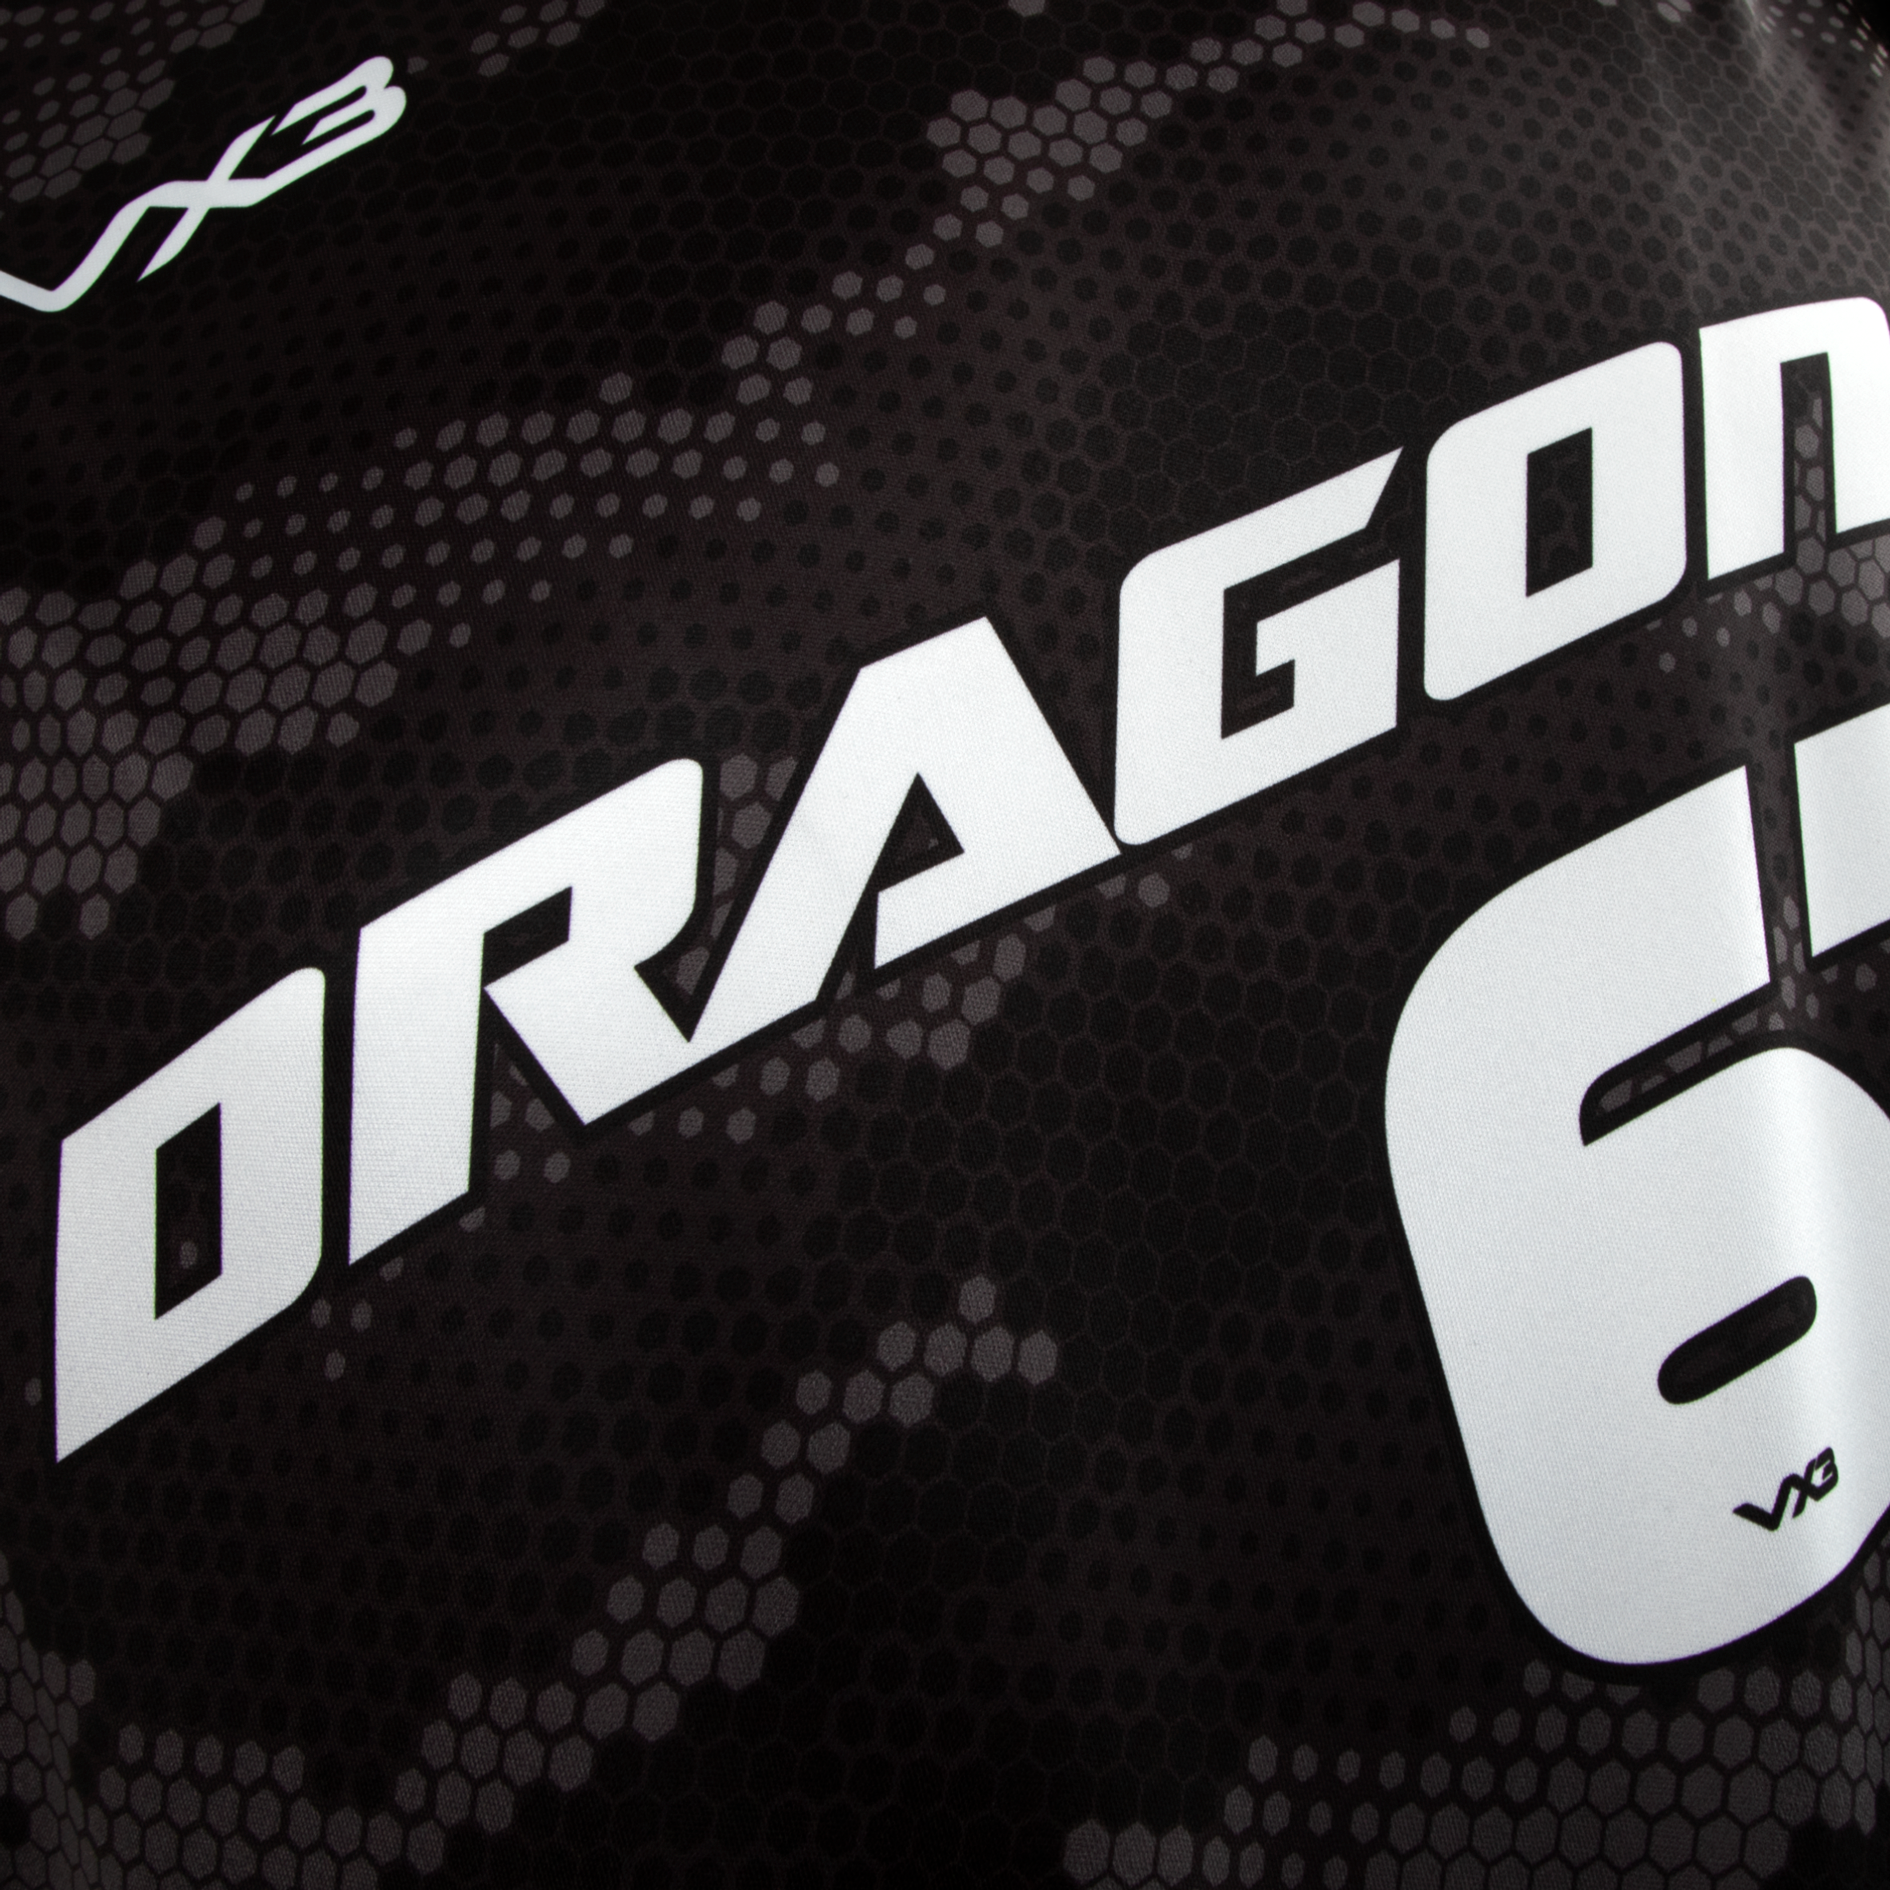 Dragons Basketball Vest 22/23